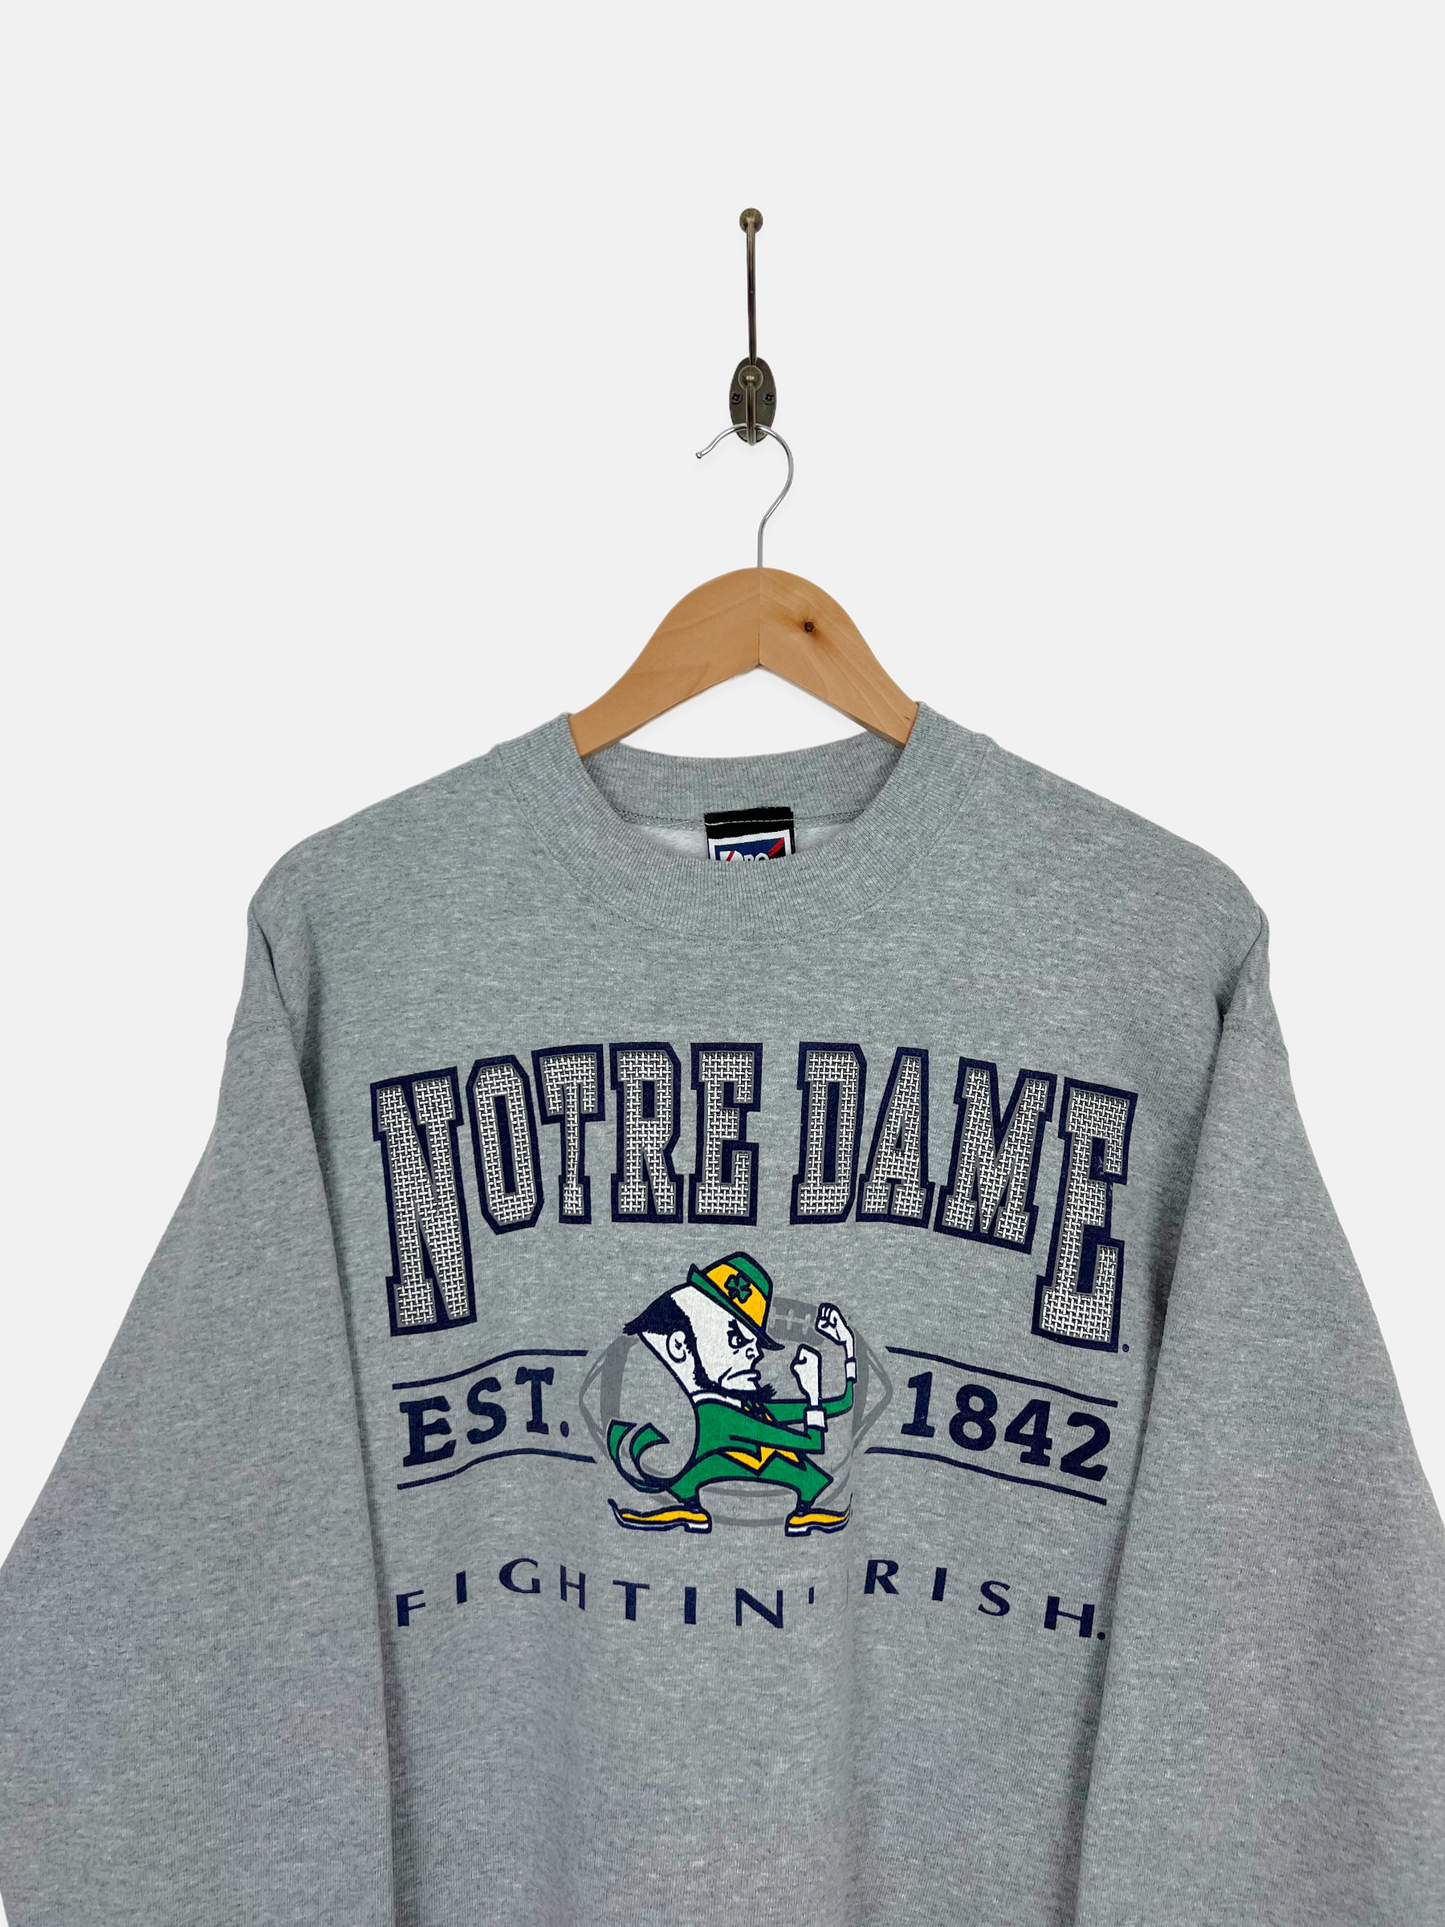 90's Notre Dame USA Made Vintage Sweatshirt Size 10-12